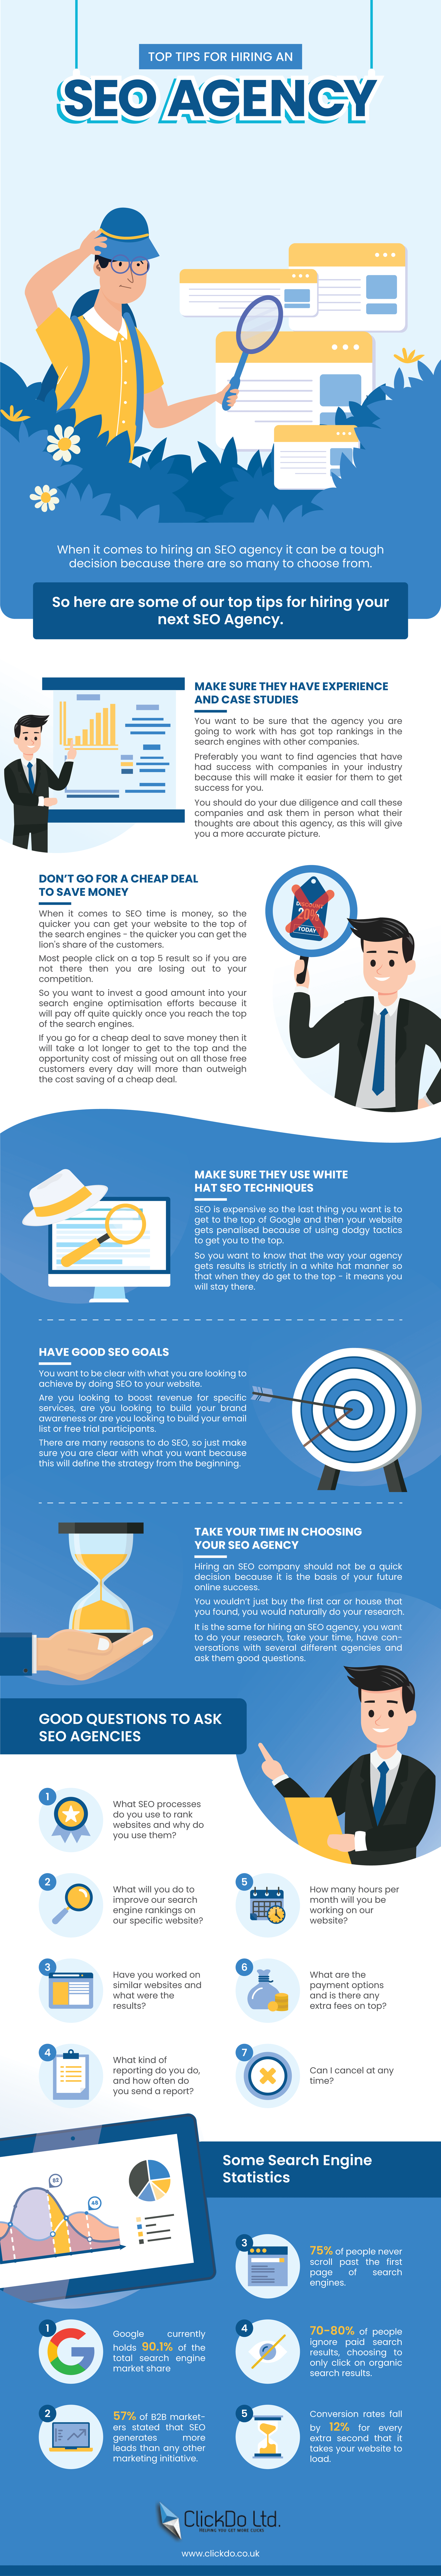 top tips for hiring an seo agency